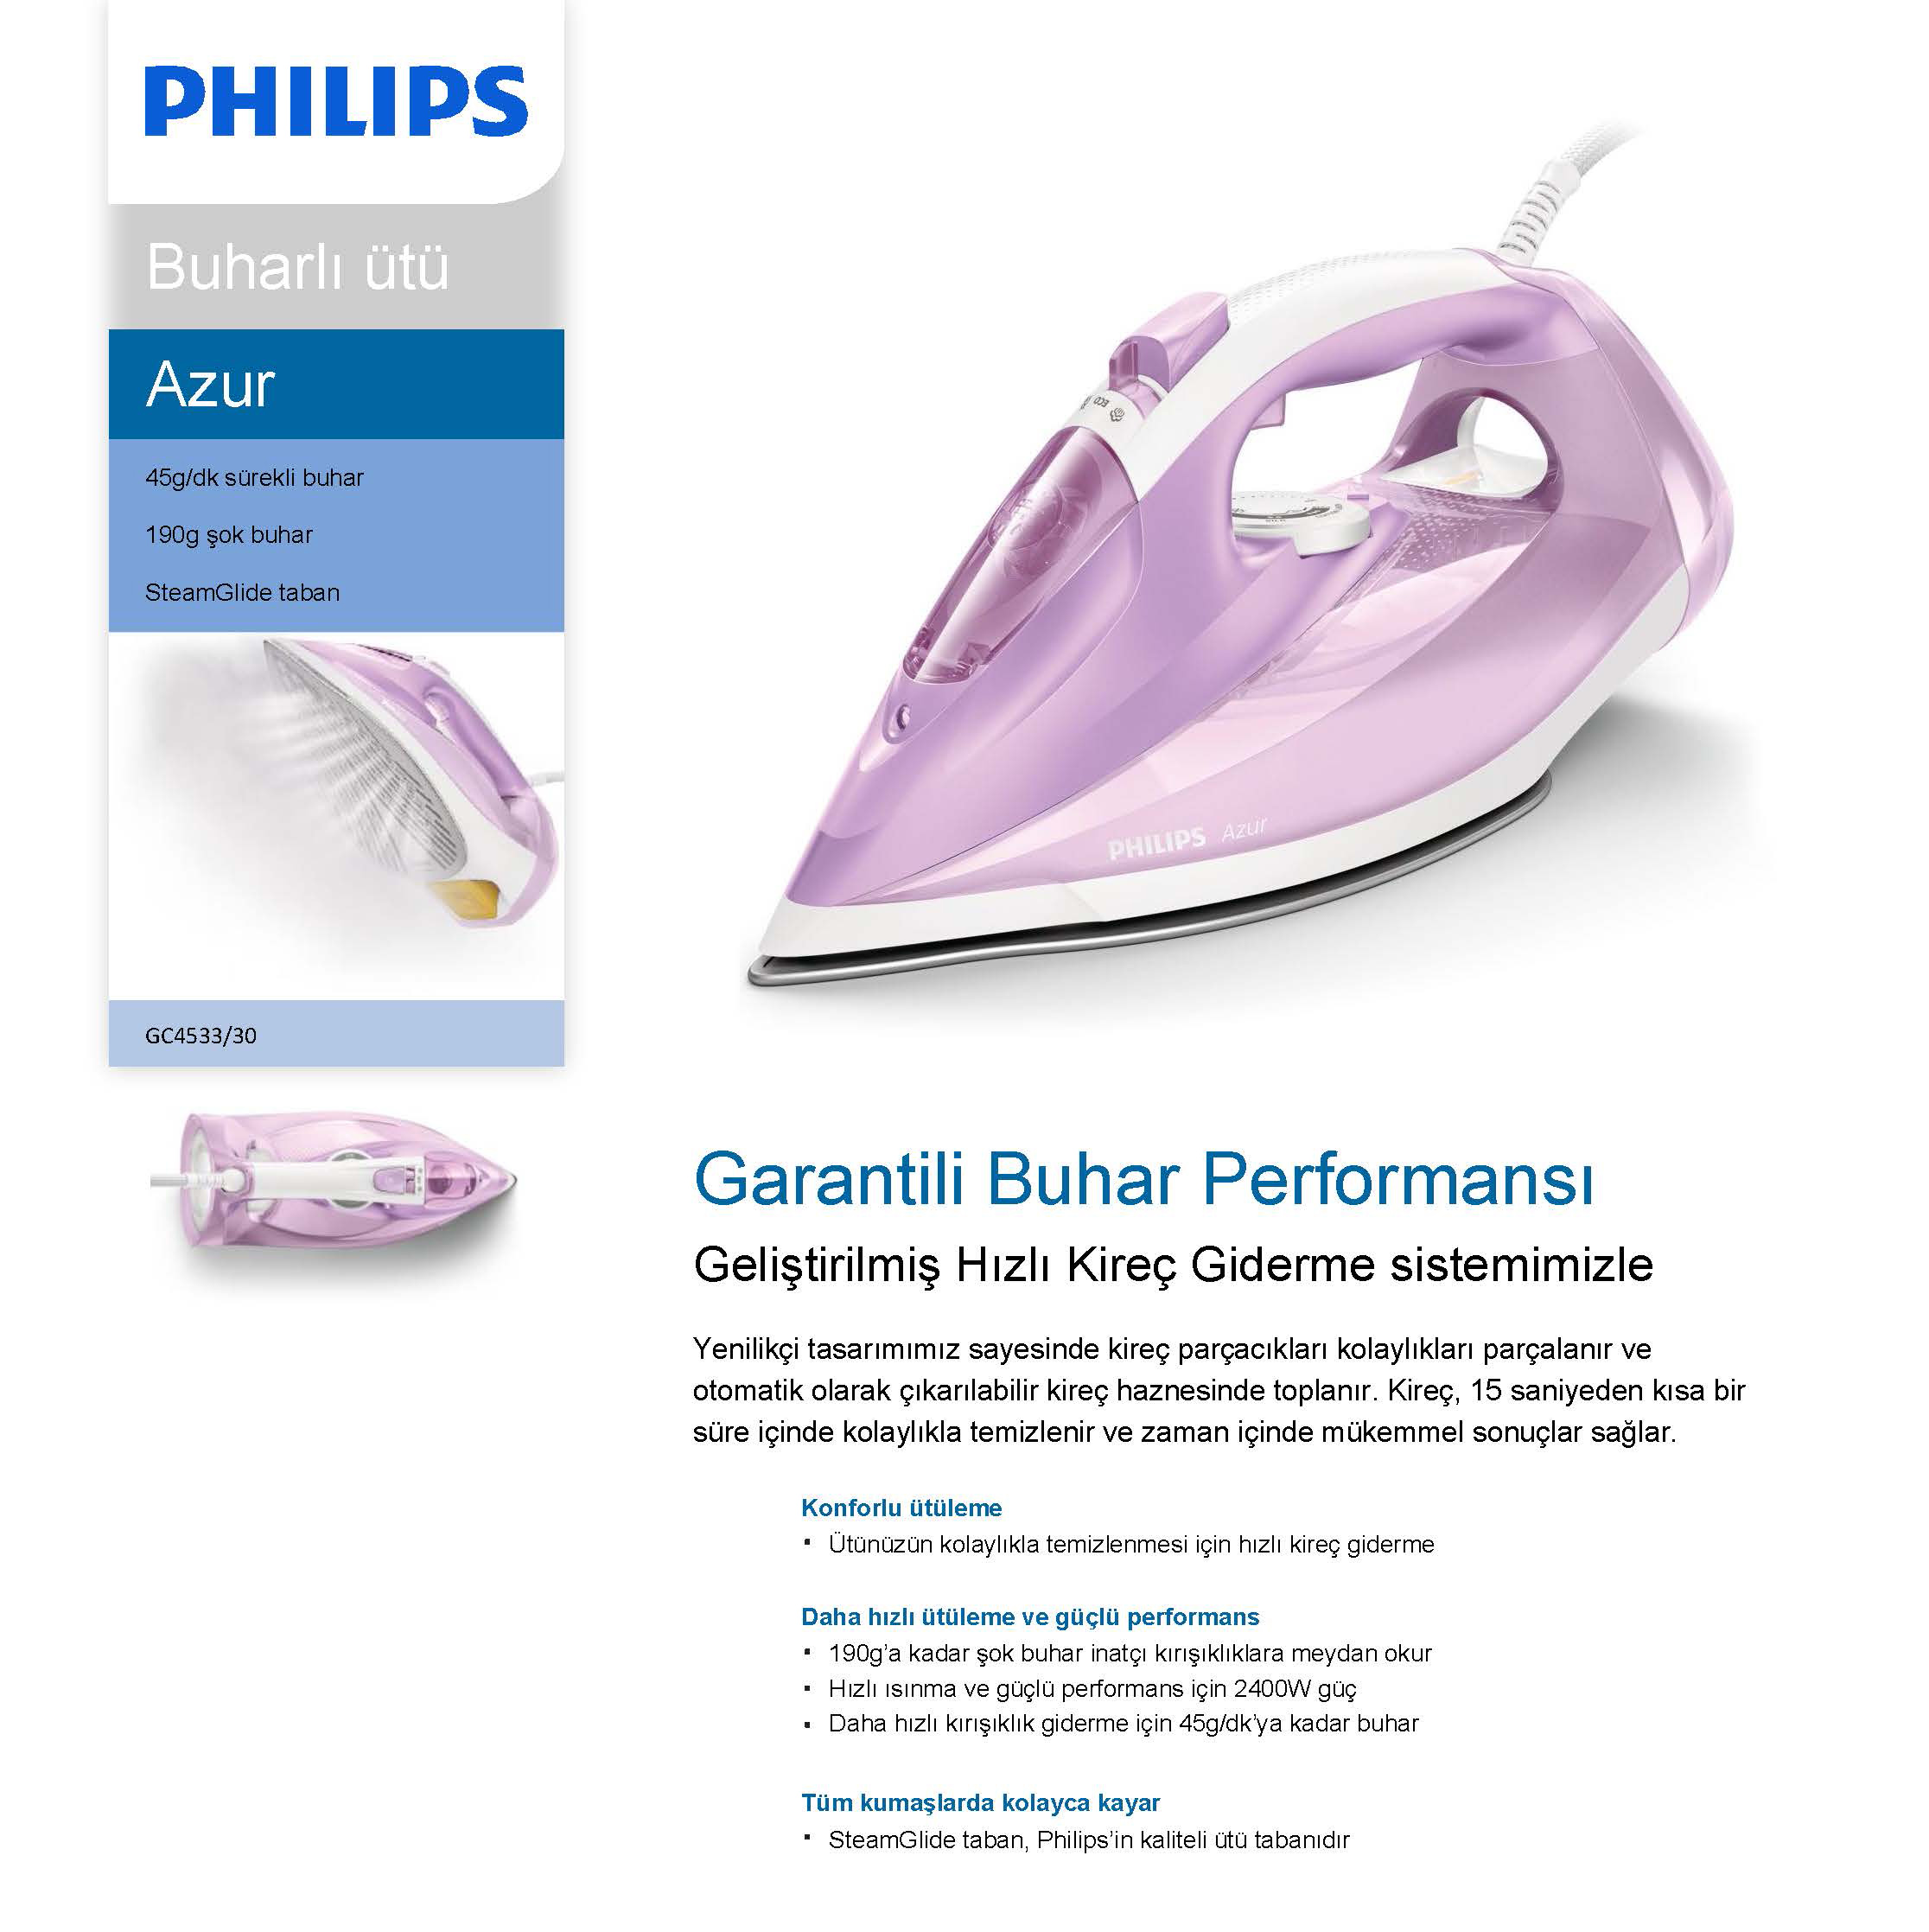 Philips azur инструкция